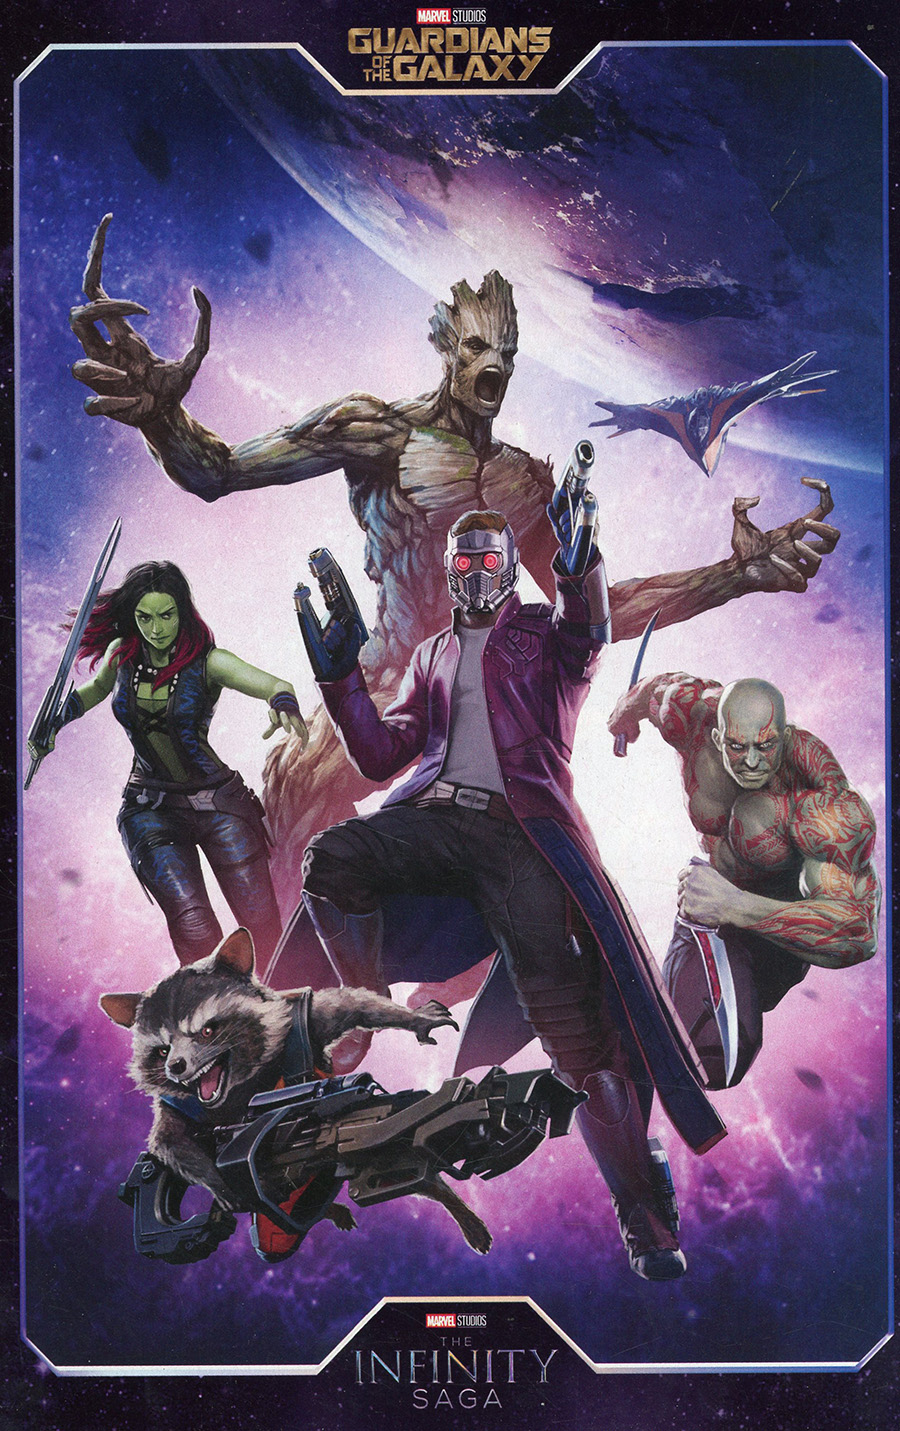 Avengers Forever Vol 2 #4 Cover C Variant Skan Infinity Saga Phase 2 Cover (Limit 1 Per Customer)